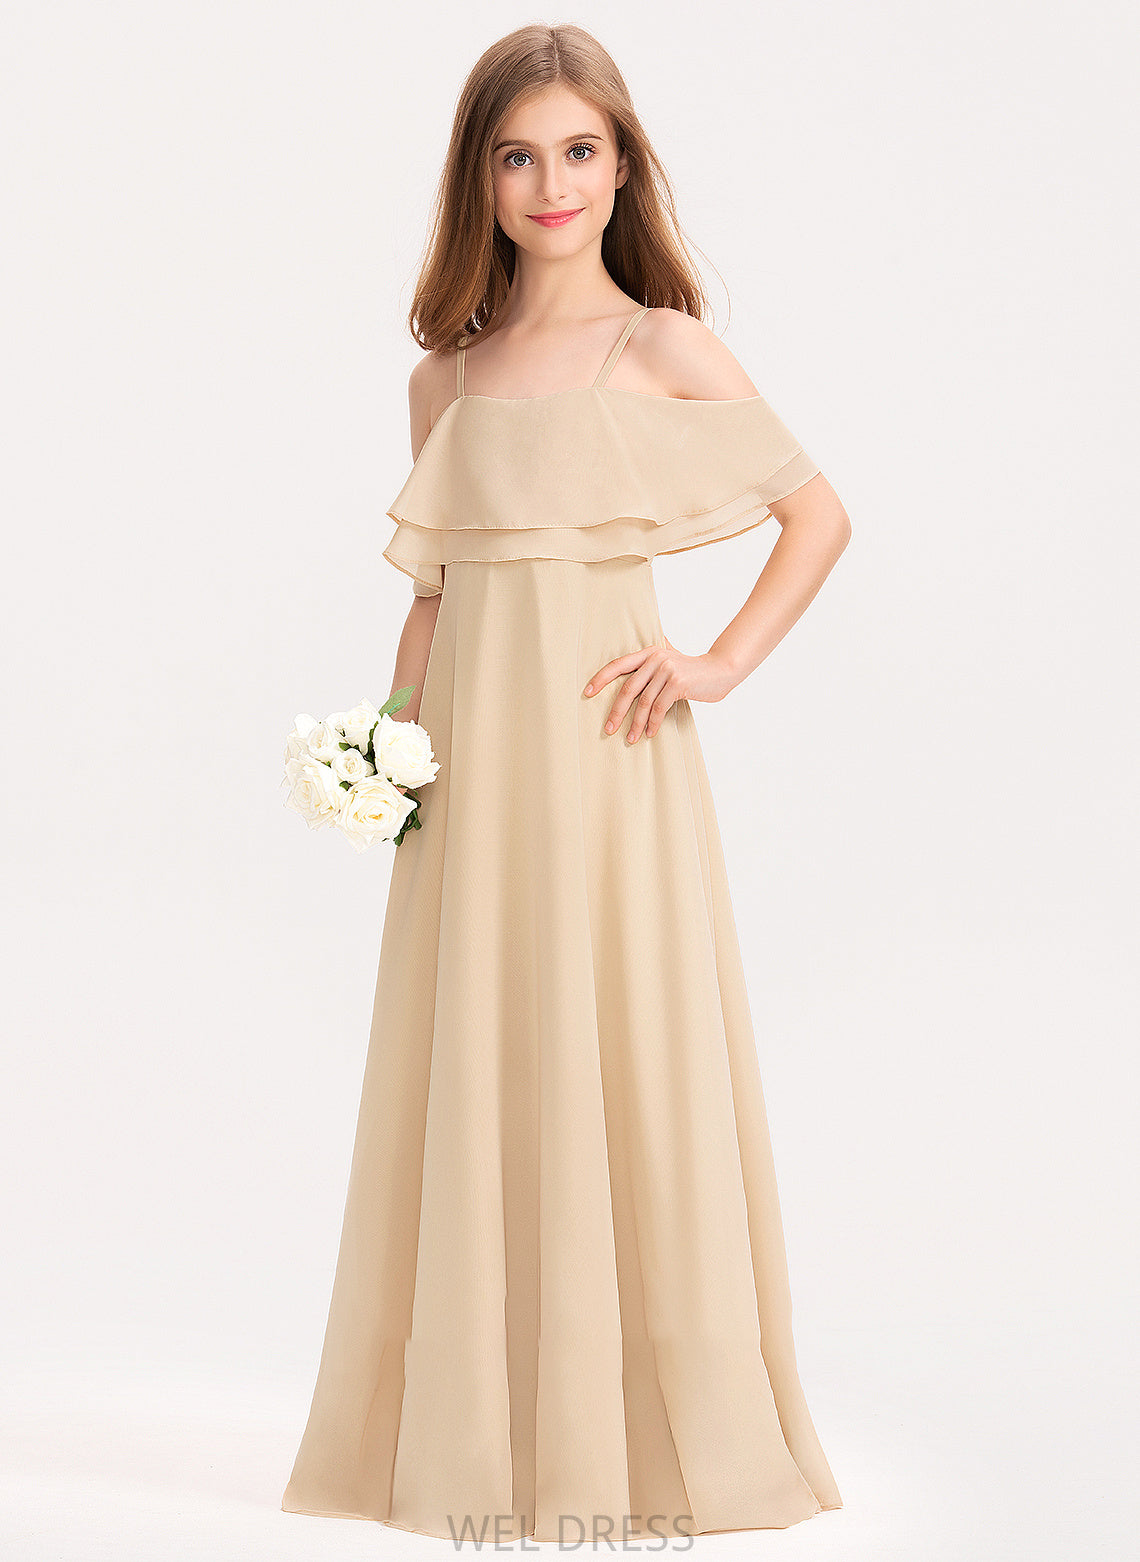 Ruffles With Junior Bridesmaid Dresses Floor-Length Kayden Cascading Off-the-Shoulder Chiffon A-Line